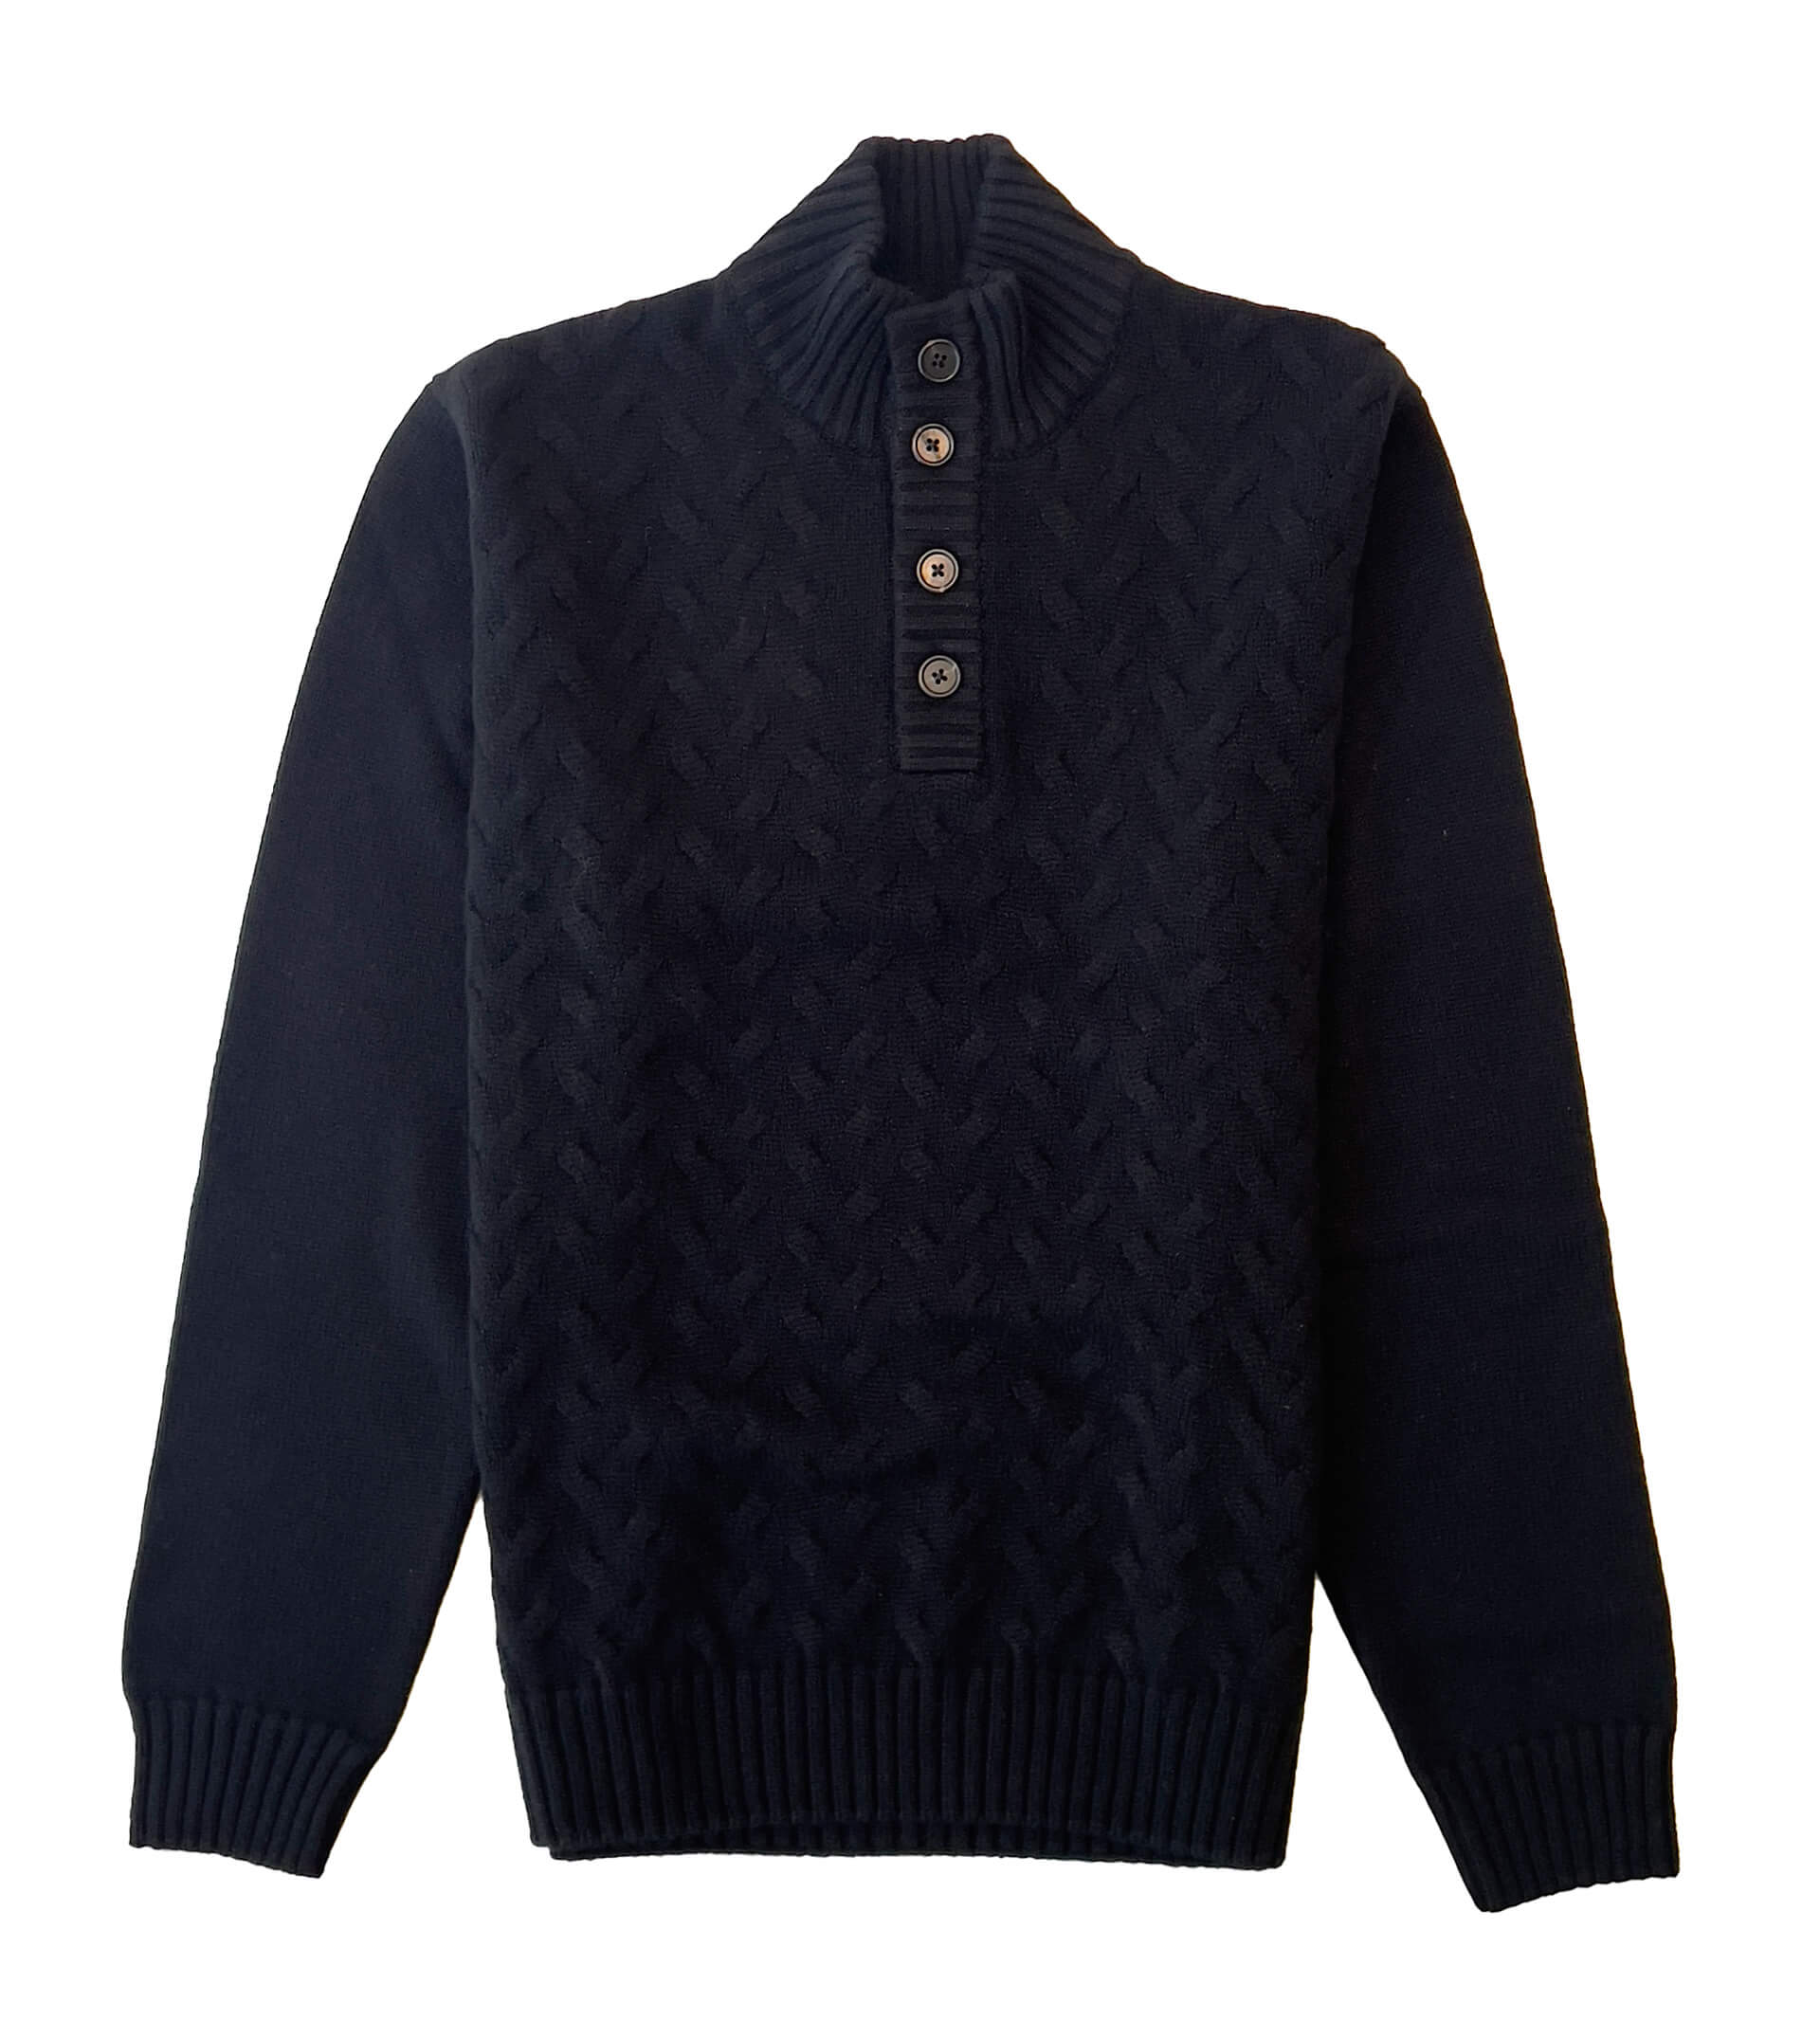 FIORONI CASHMERE 100% Cashmere Cable Knit Mock Sweater